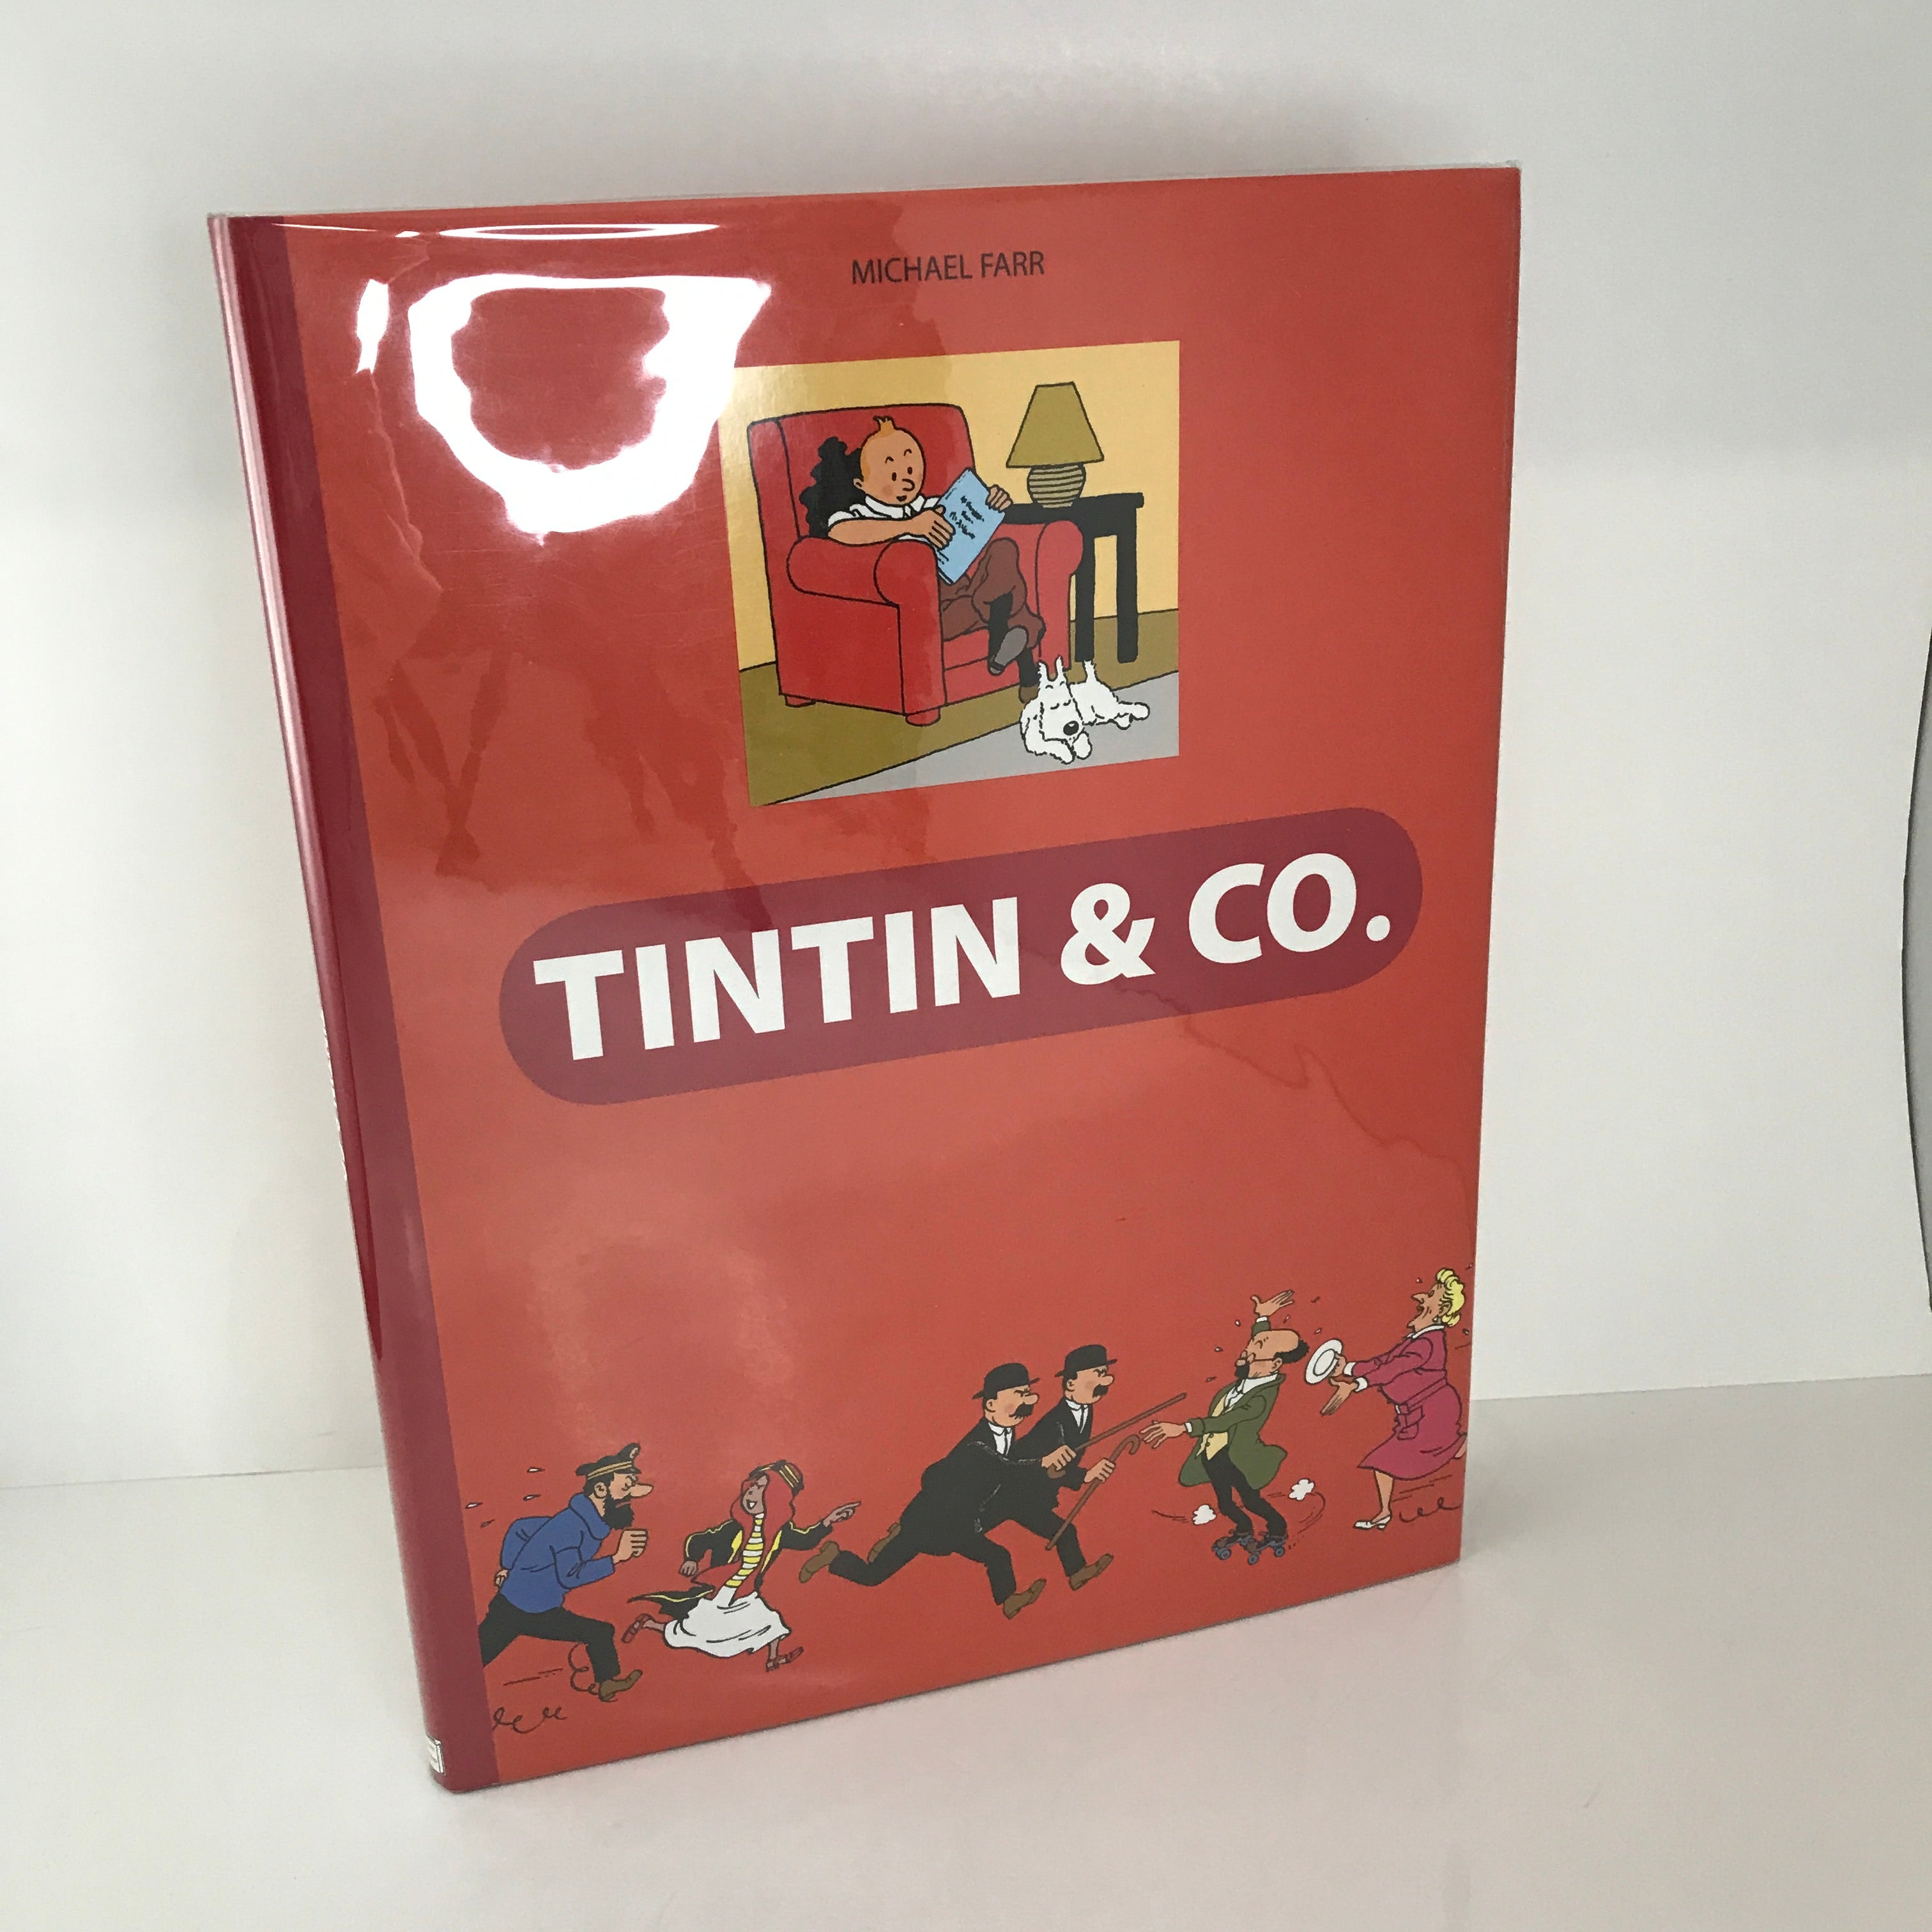 Libro Tintin, The Complete Companion de Michael Farr